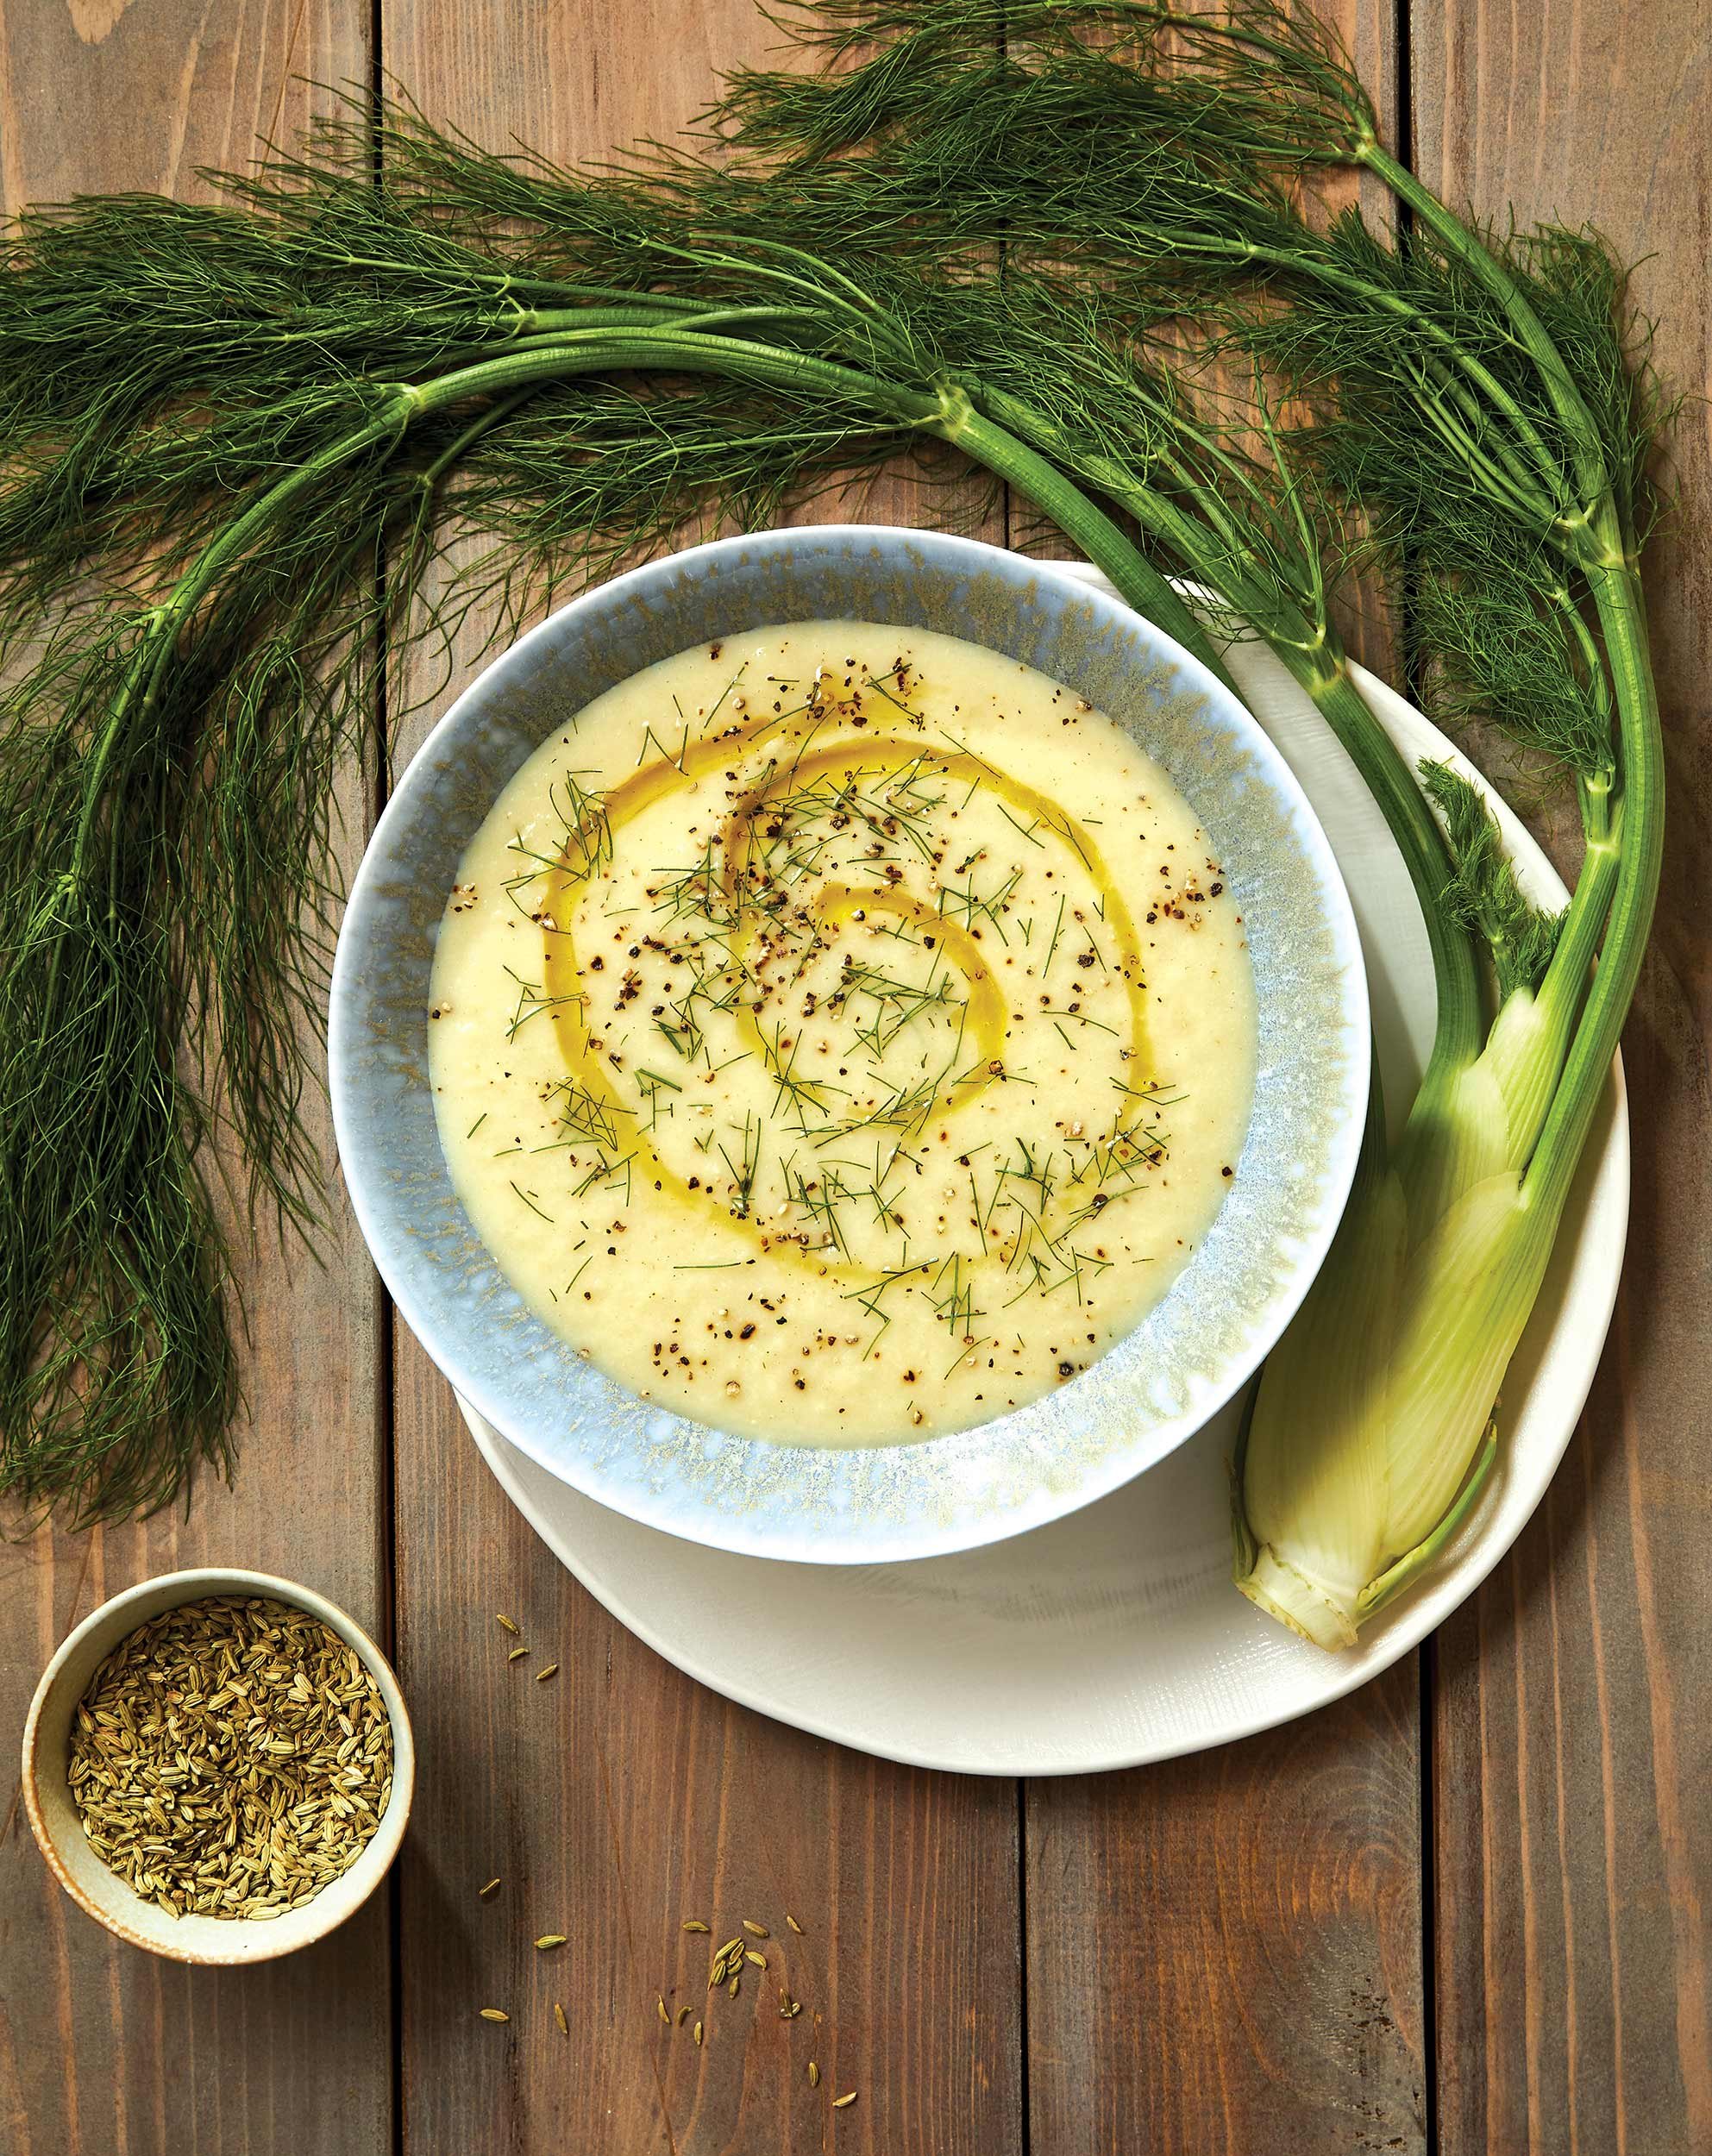 nyc-nj-cookbook-photographer-food-joy-of-balance-divya-alter-fennel-soup.jpg